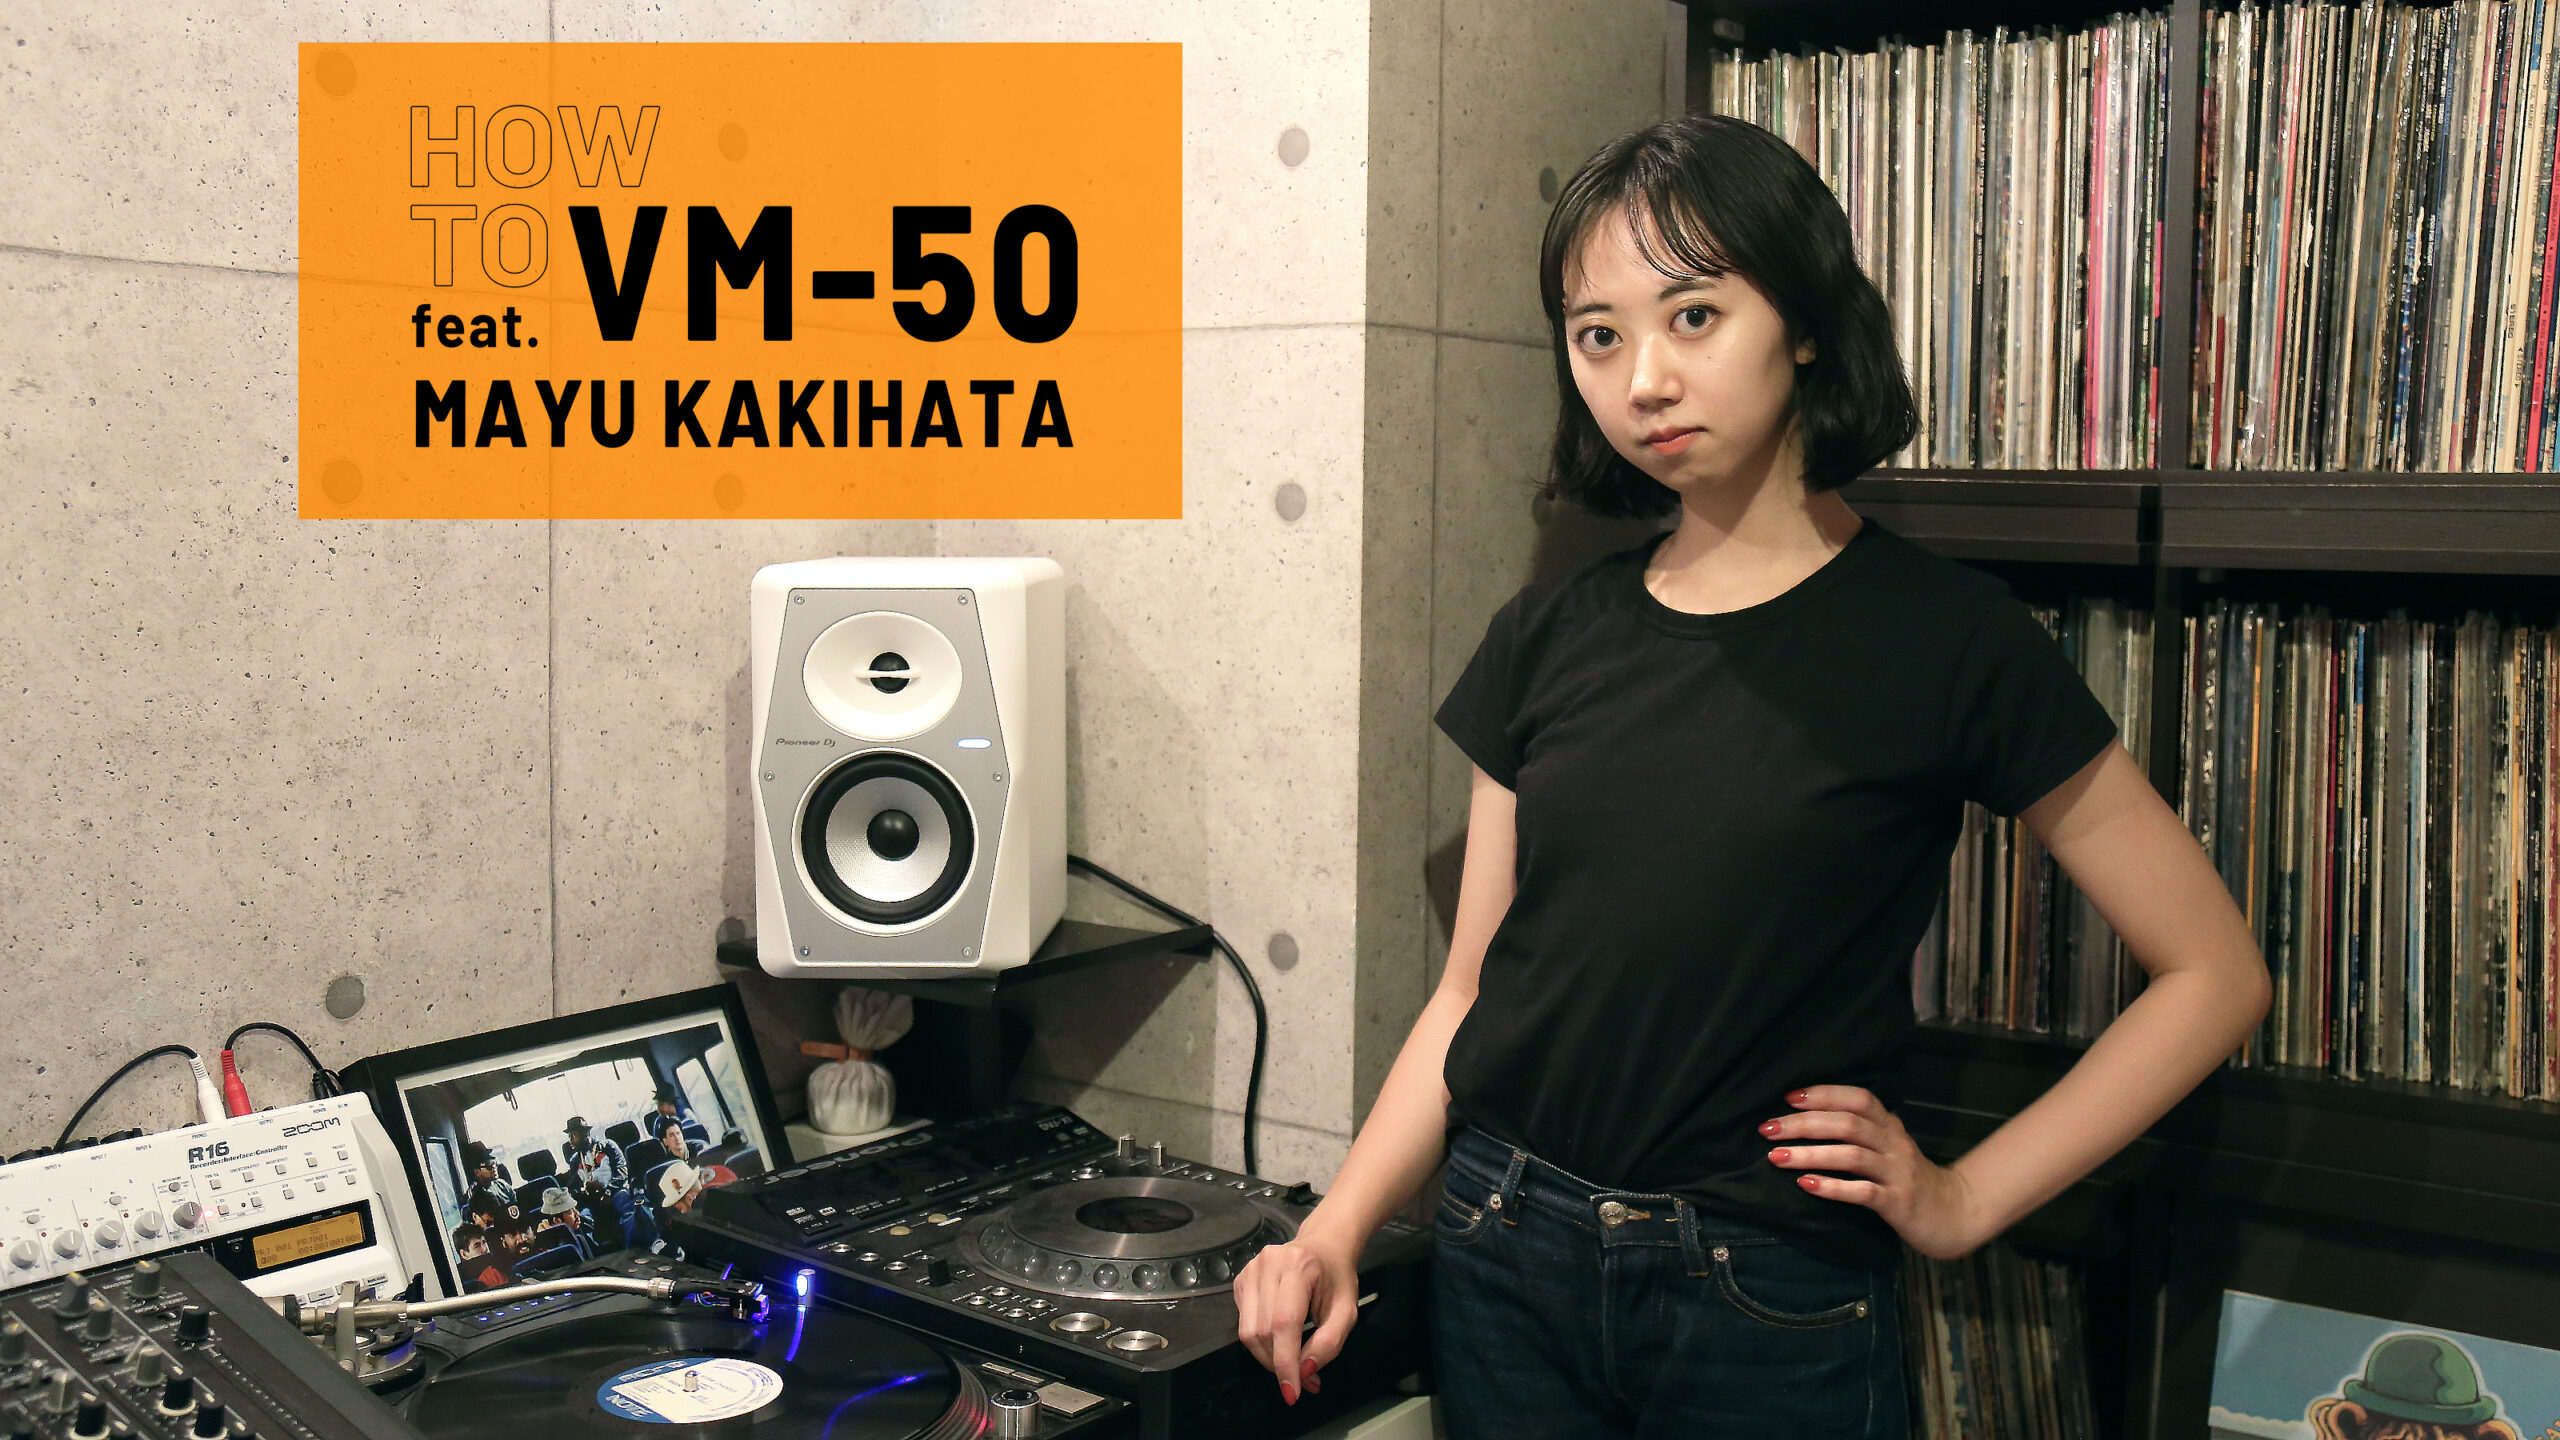 HOW TO VM-50 feat. Mayu Kakihata